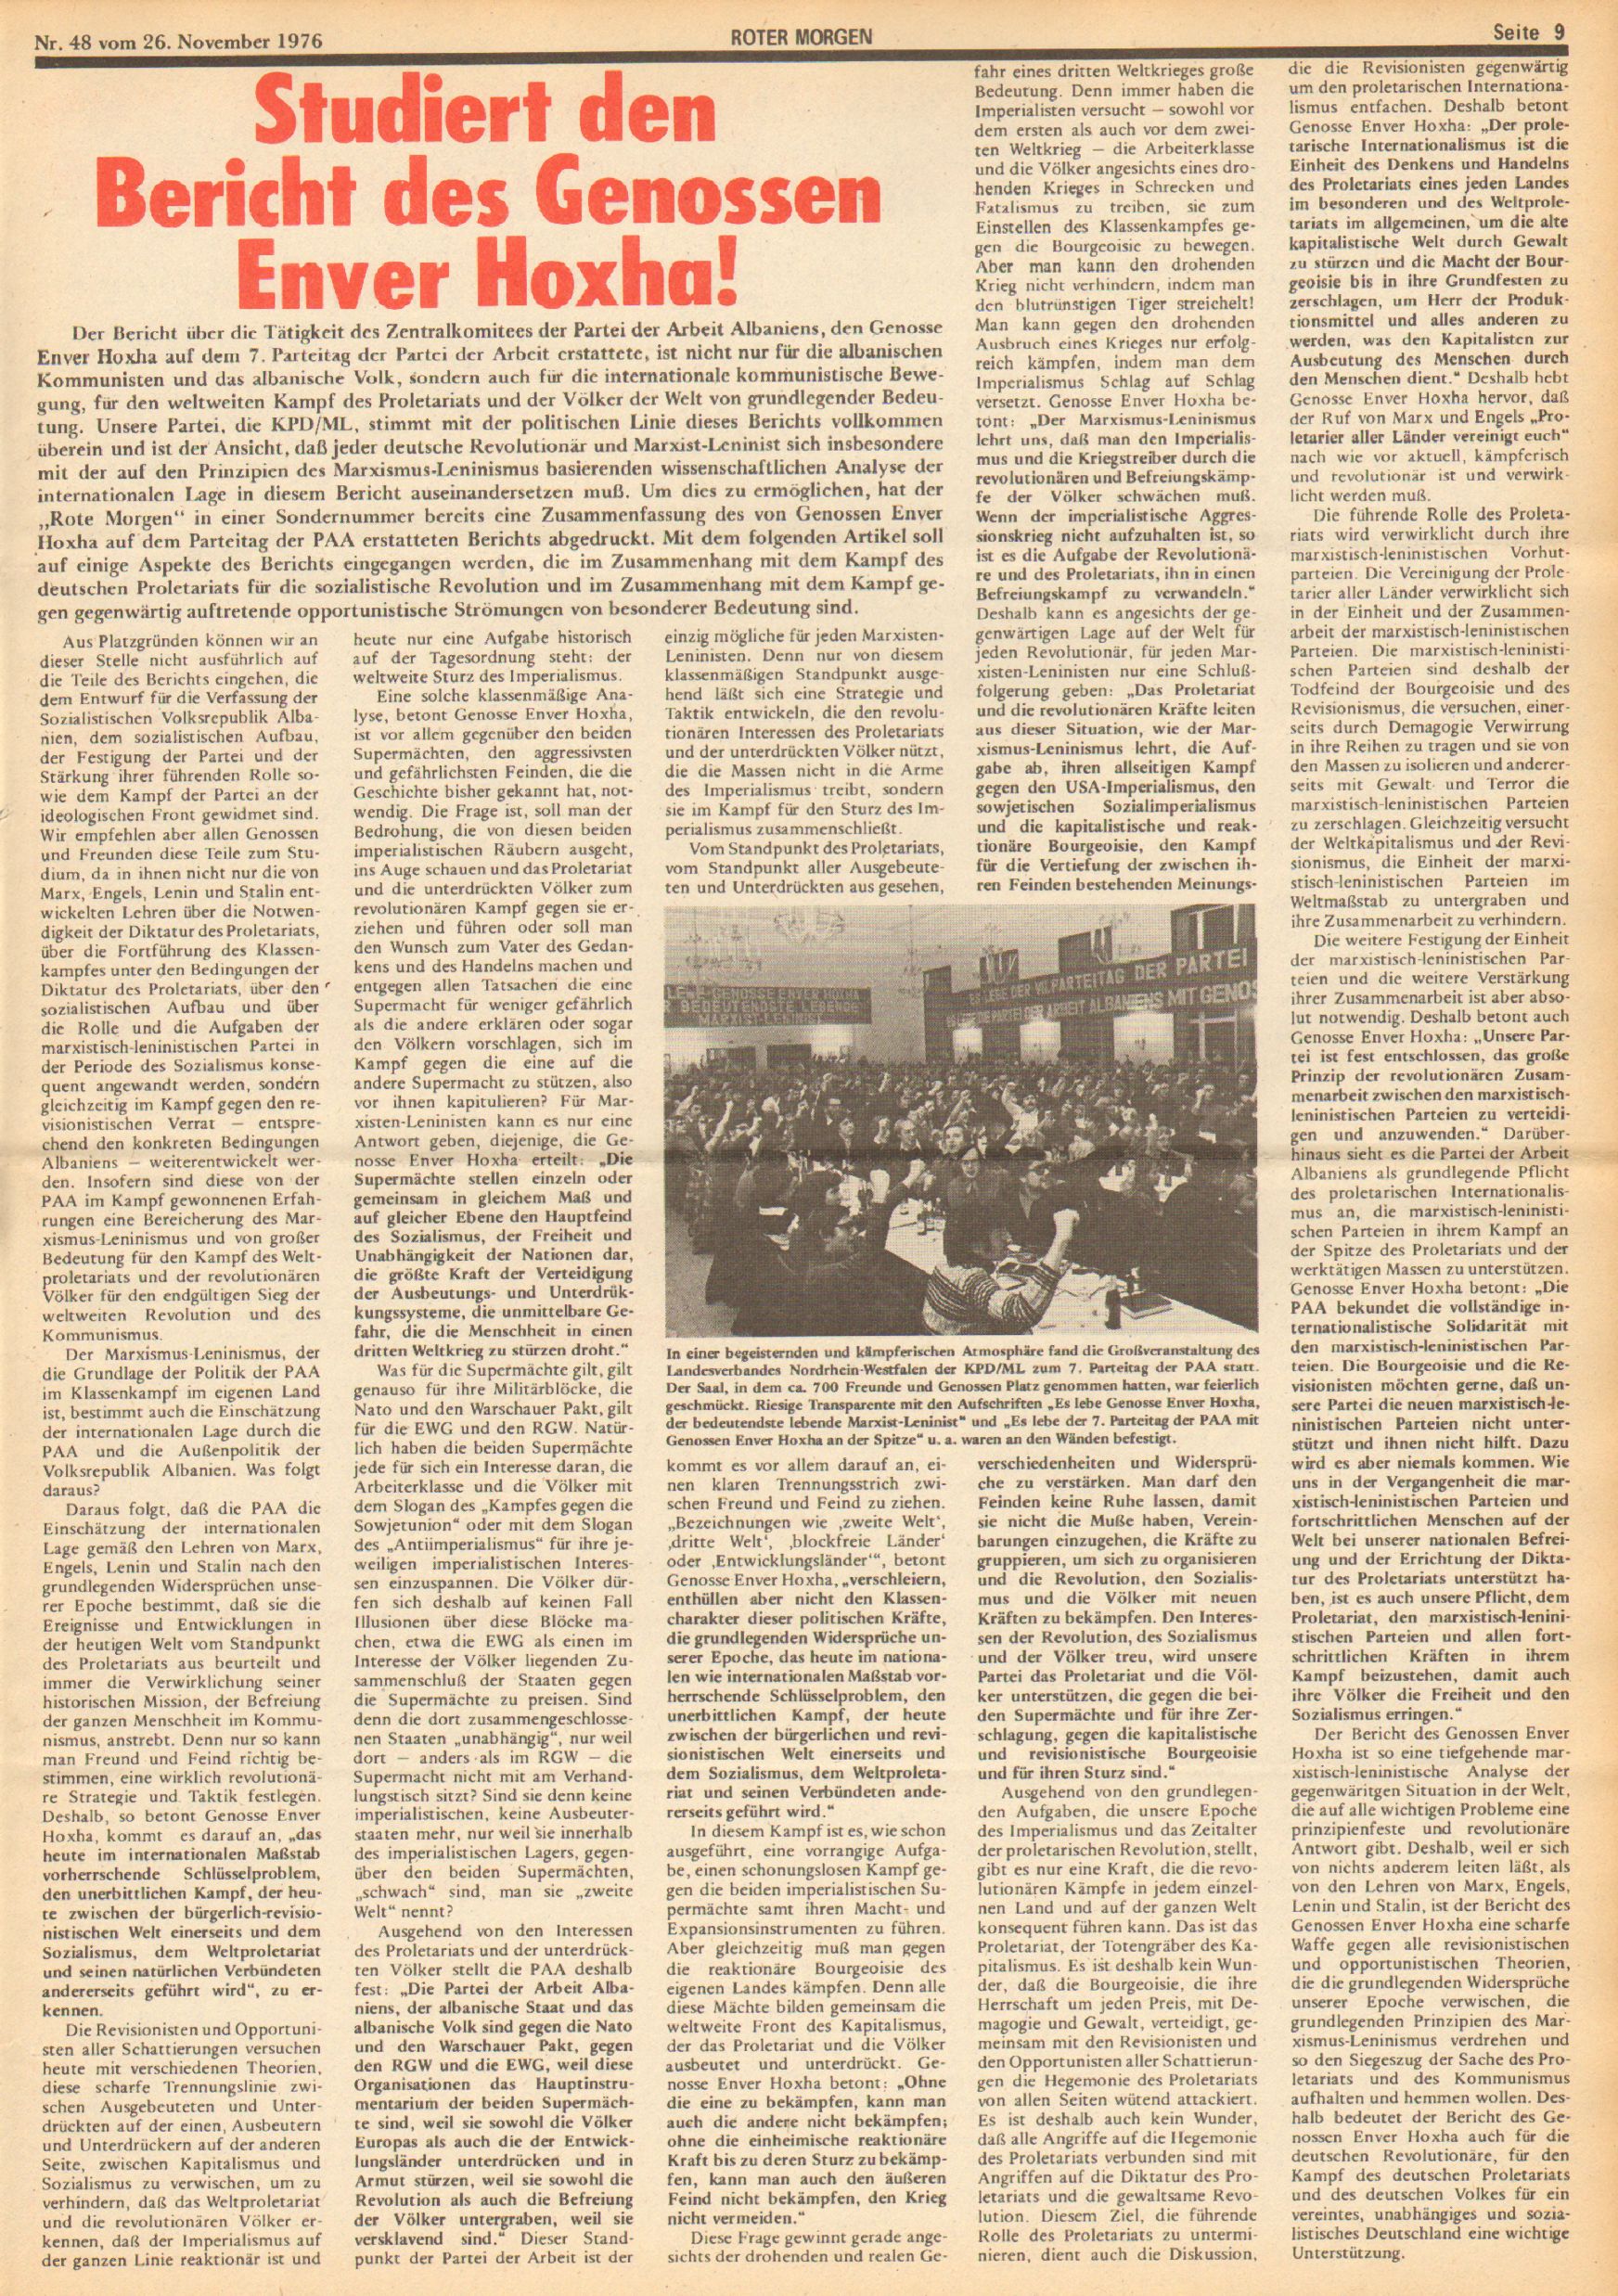 Roter Morgen, 10. Jg., 26. November 1976, Nr. 48, Seite 9